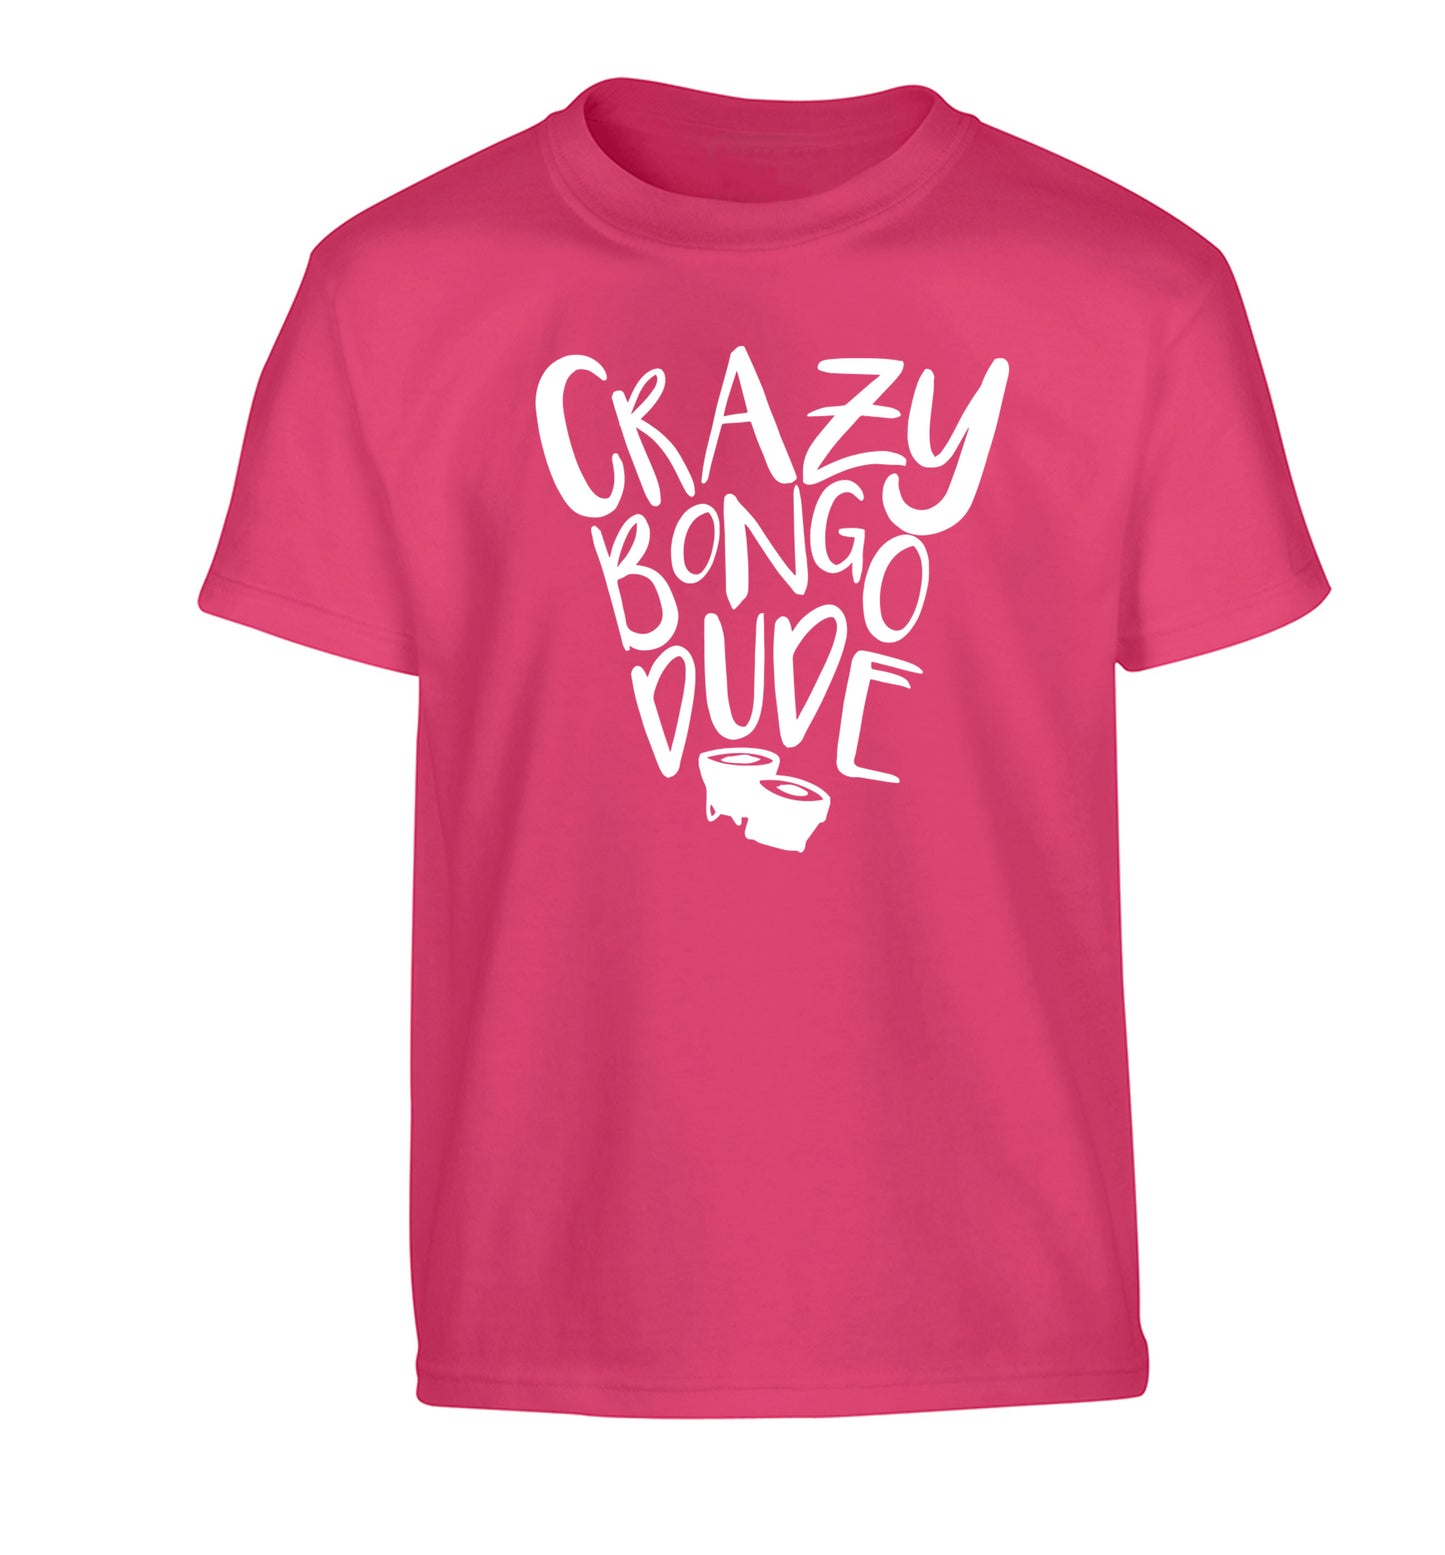 Crazy bongo dude Children's pink Tshirt 12-14 Years